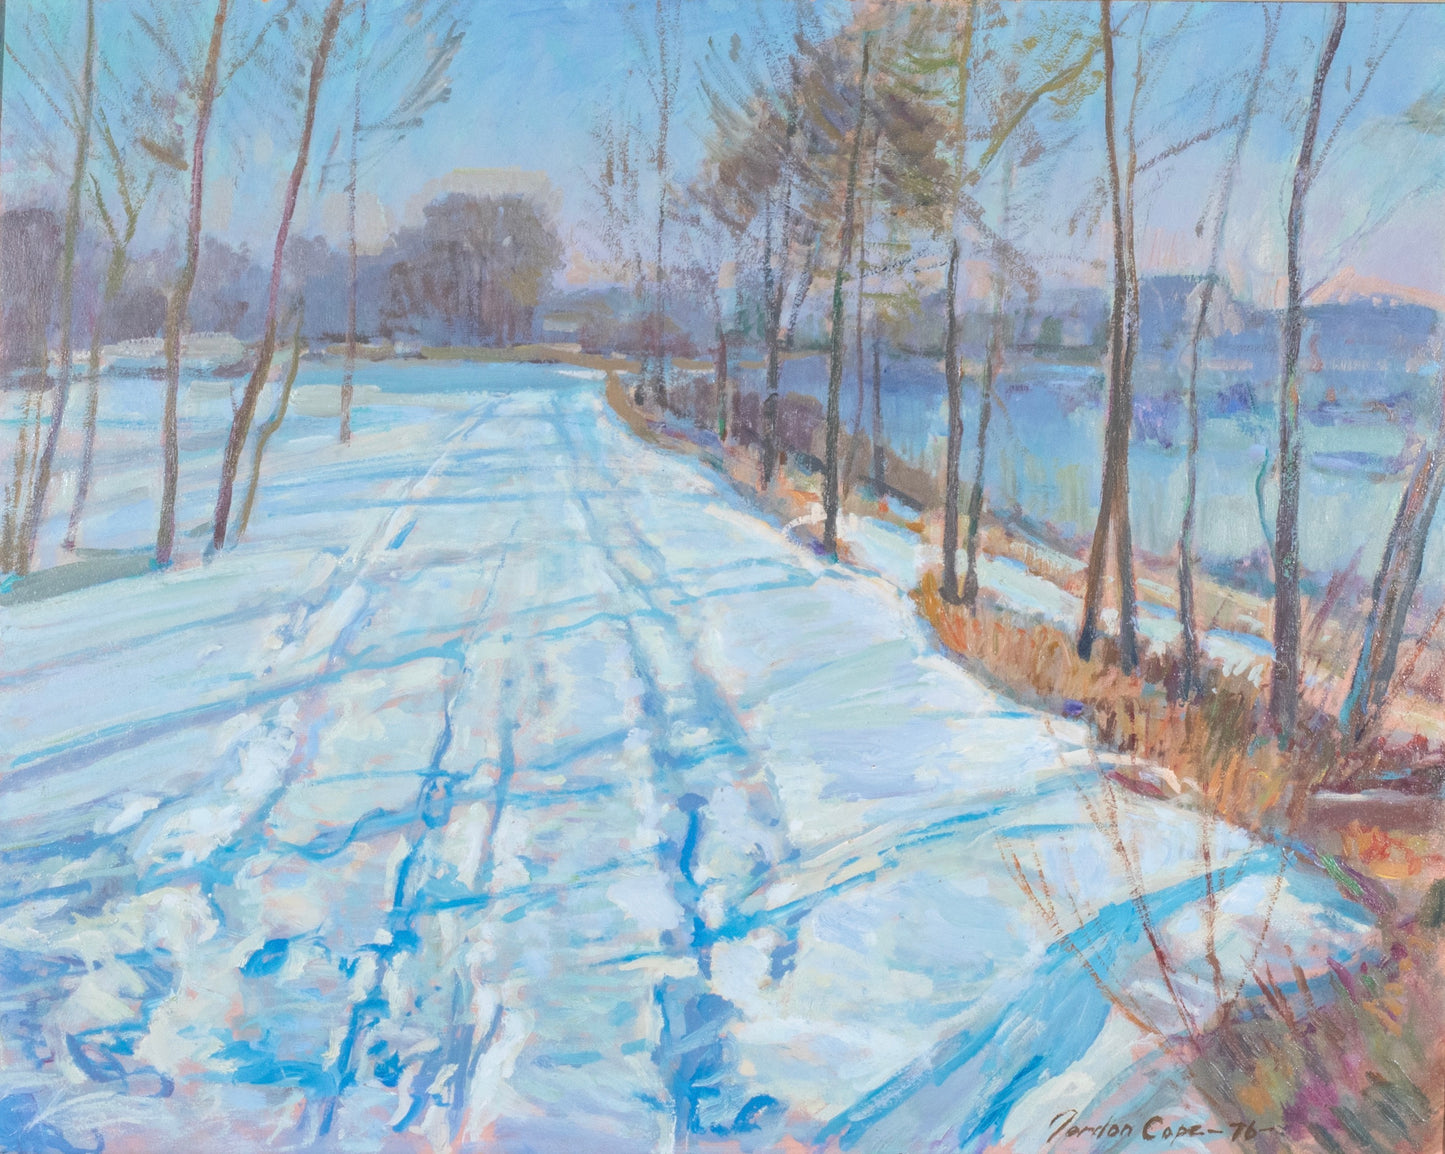 Gordon Cope - Winter Road 24” x 30"